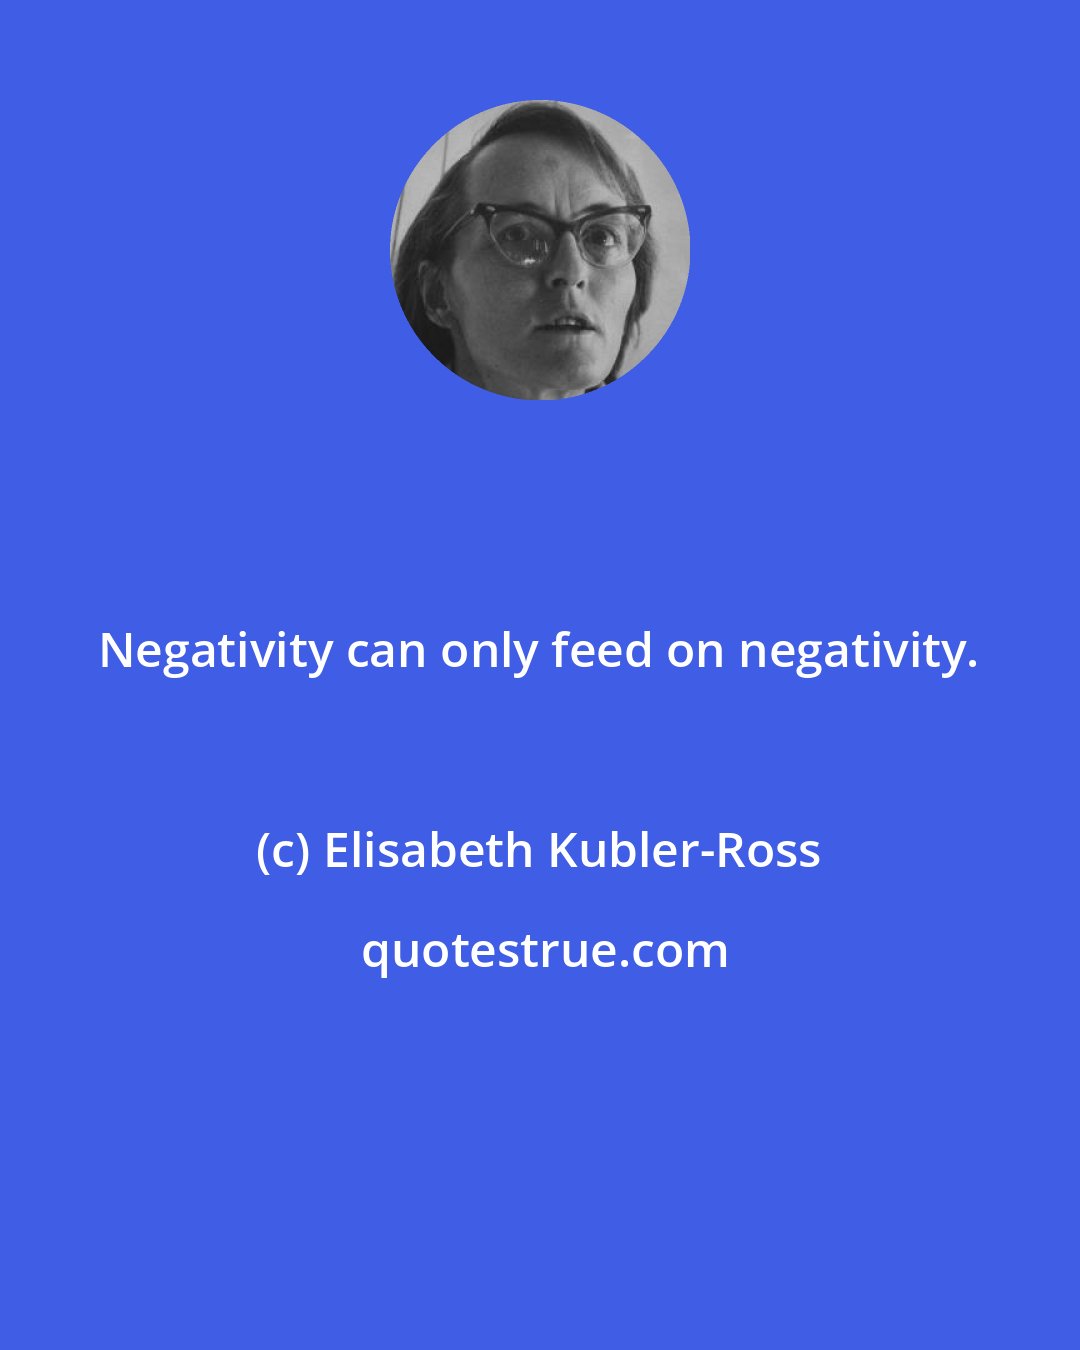 Elisabeth Kubler-Ross: Negativity can only feed on negativity.